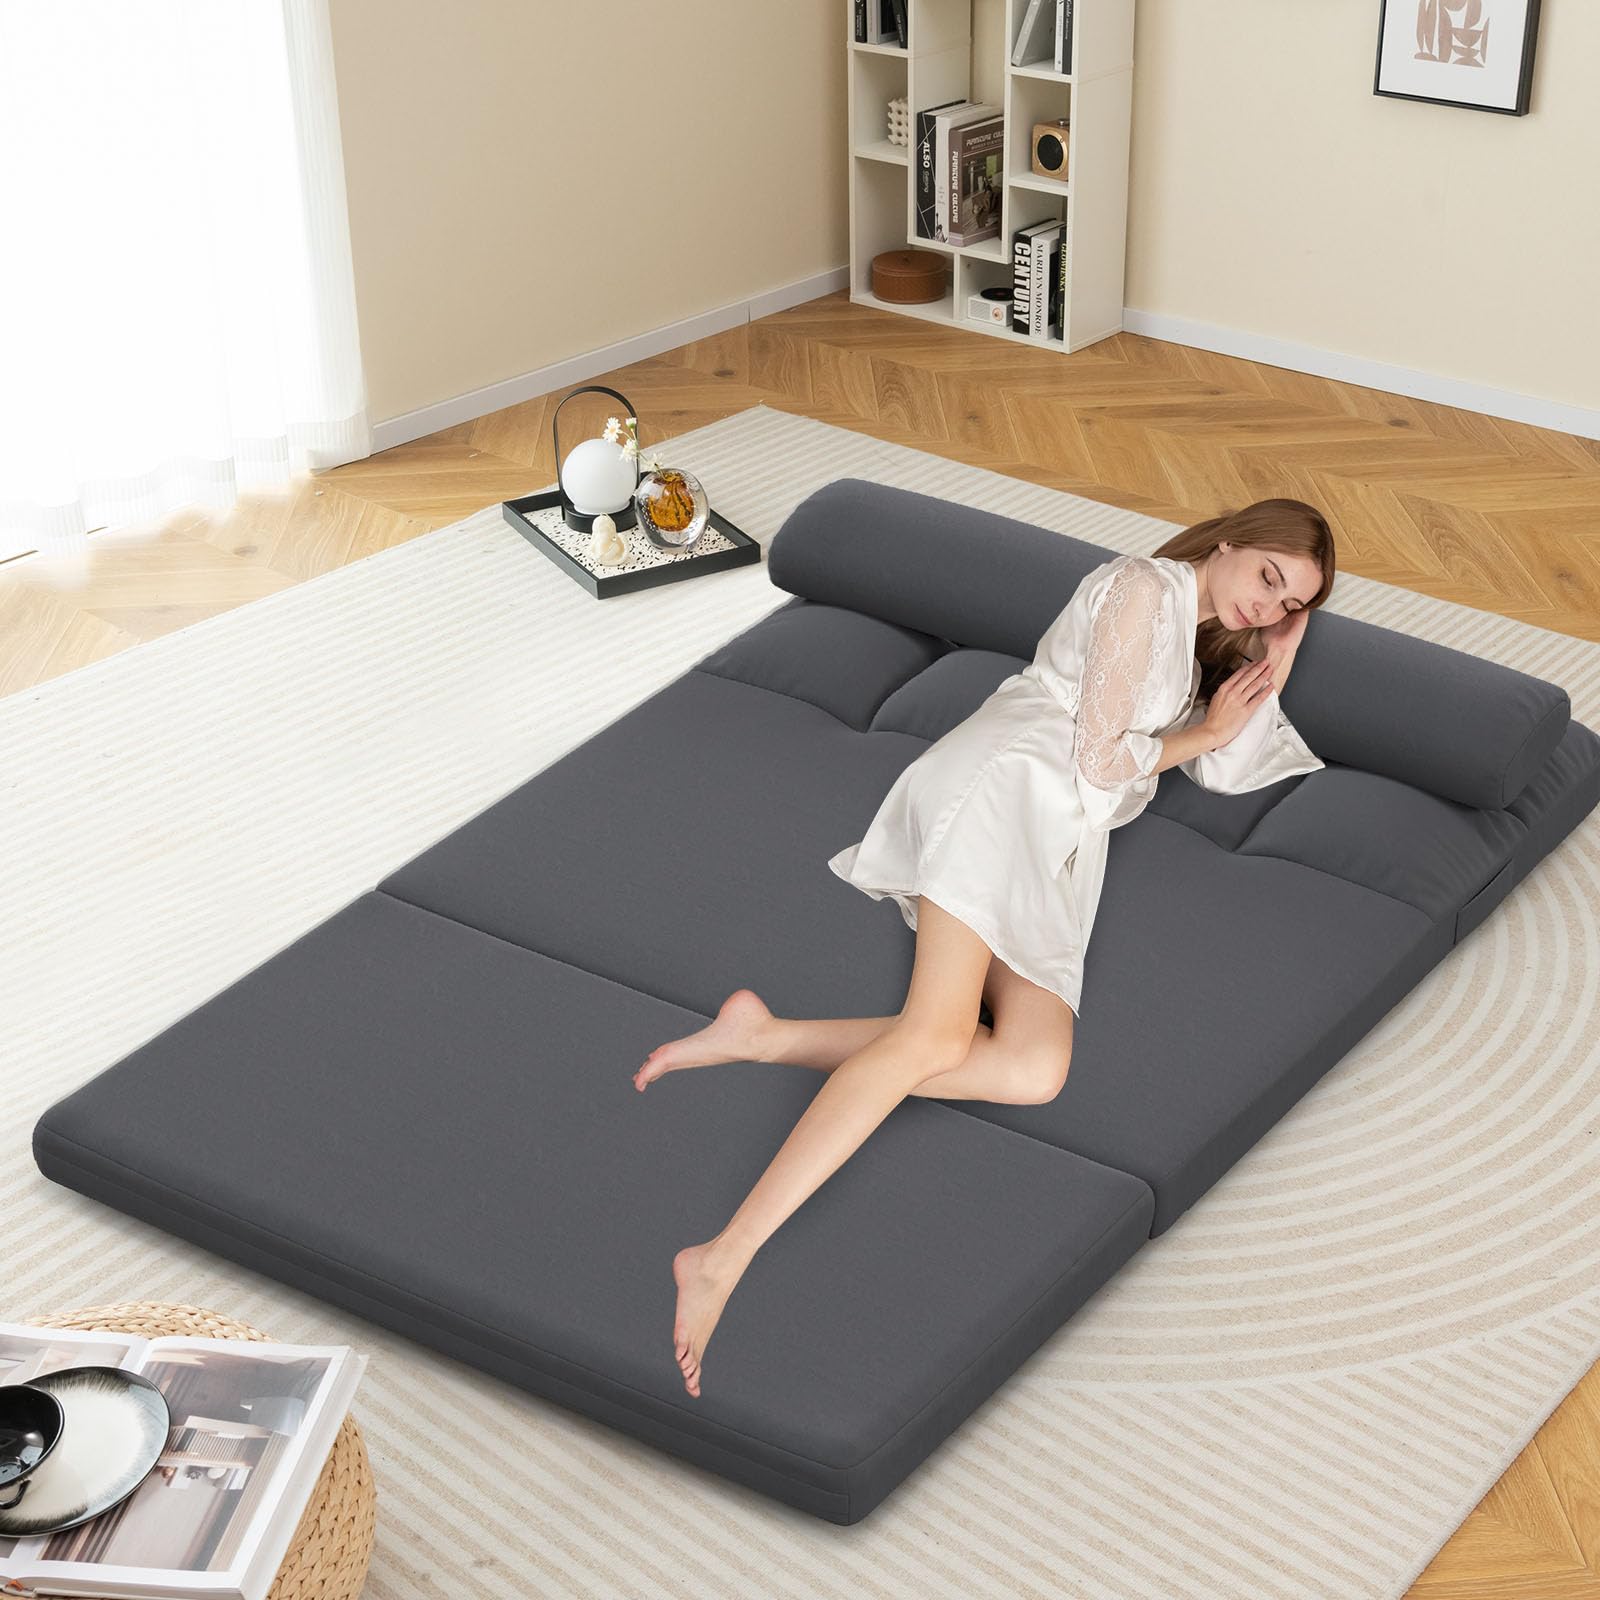 Giantex Floor Sofa Bed with 2 Pillows, Convertible Sofa Couch